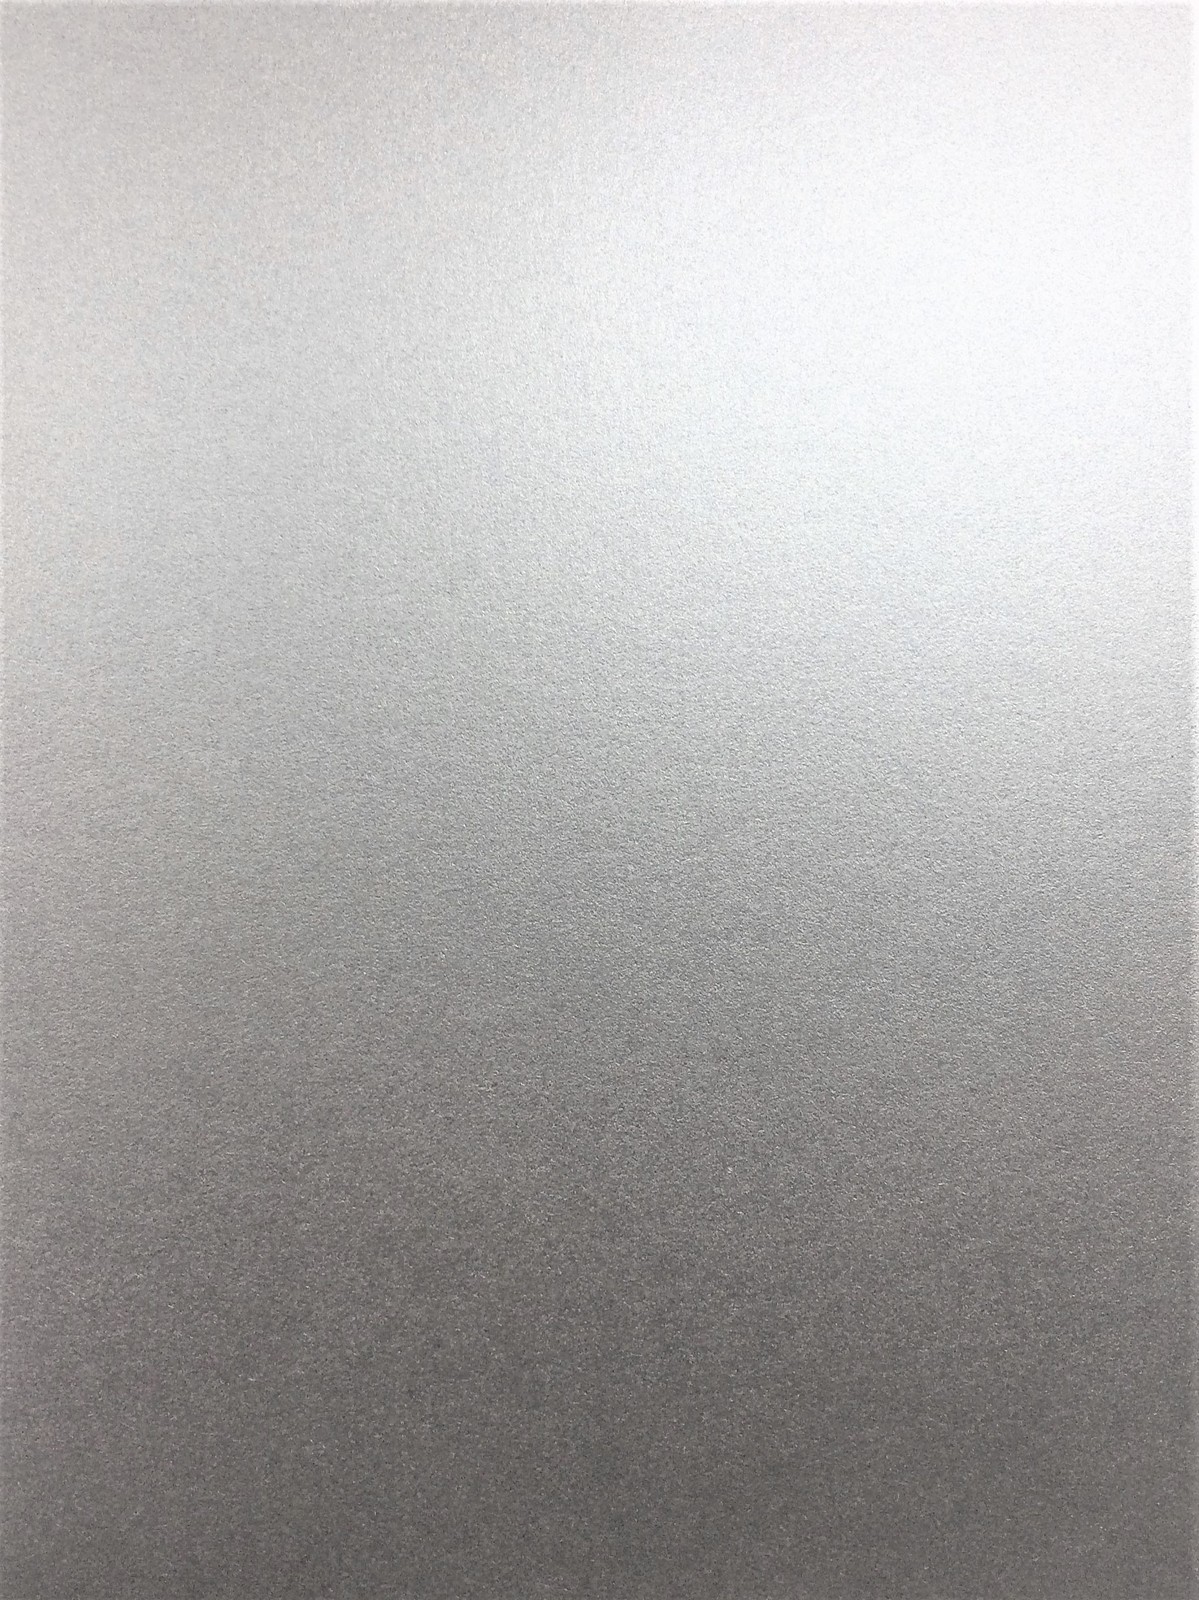 Stardream Silver Metallic Paper A4 120gsm